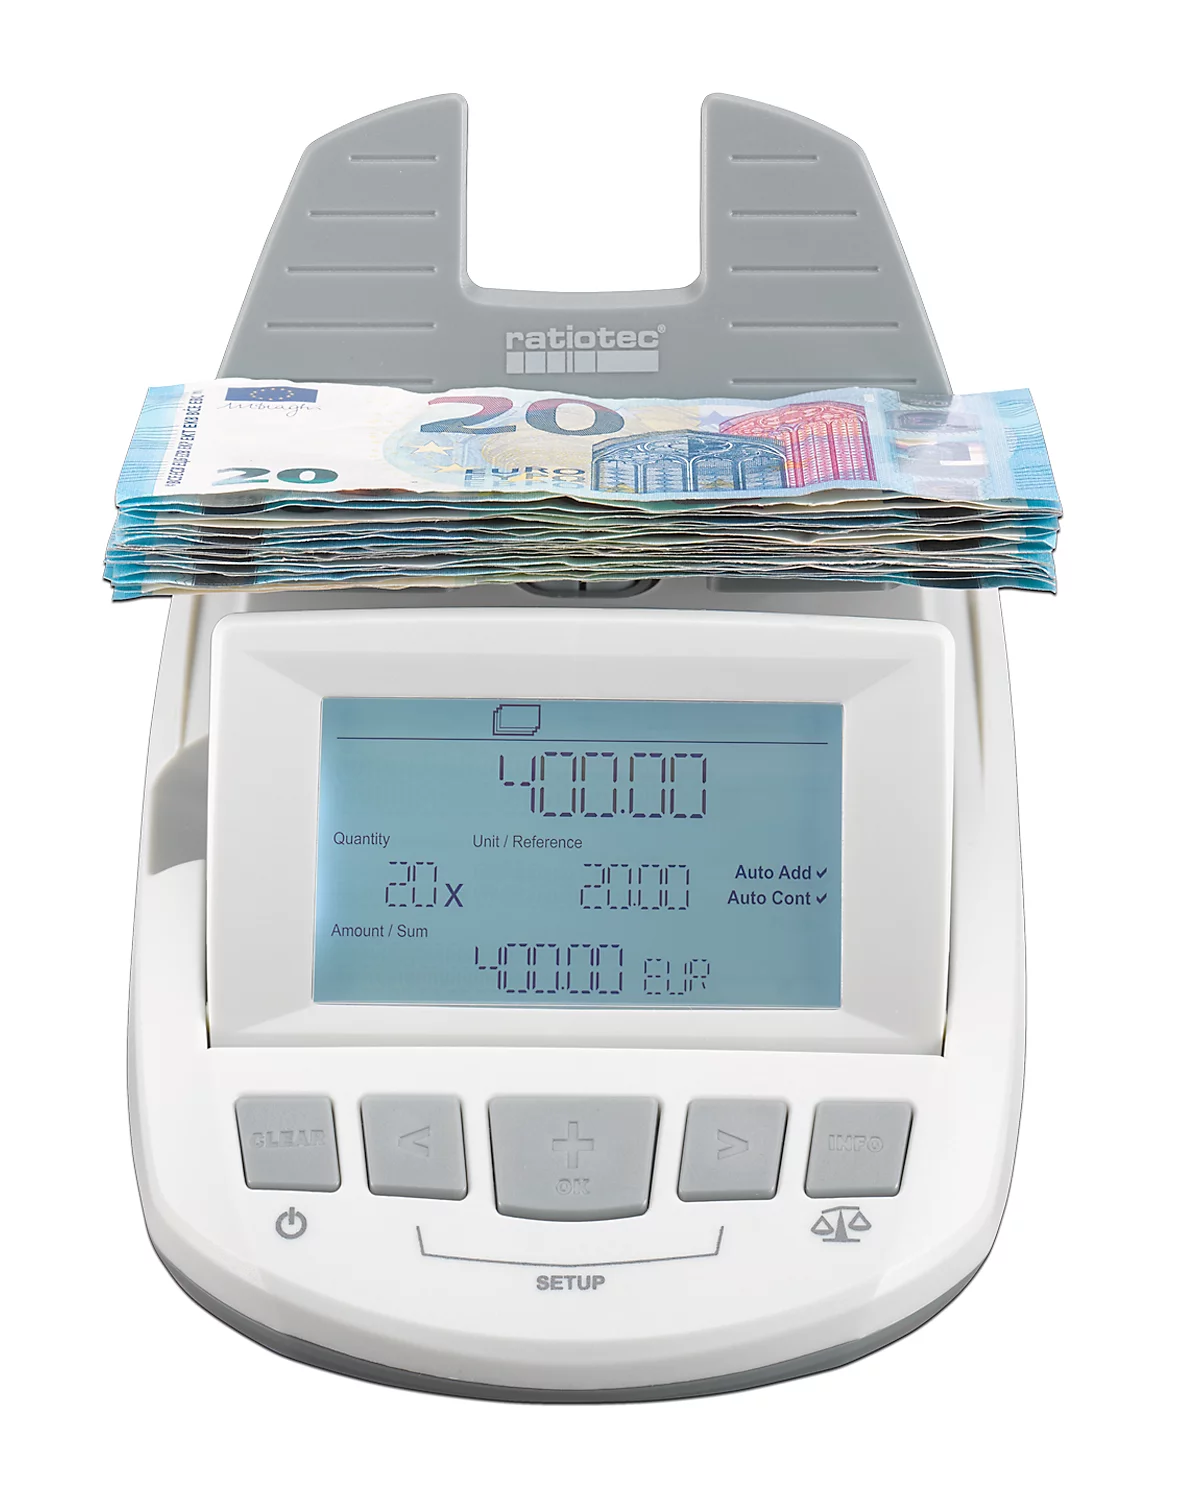 Geldwaage ratiotec® RS 1000, für Münzen & Banknoten, EUR/GBP/CHF, Additions- & Druckfunktion, USB, L 190 x B 129 x H 108 mm, grau